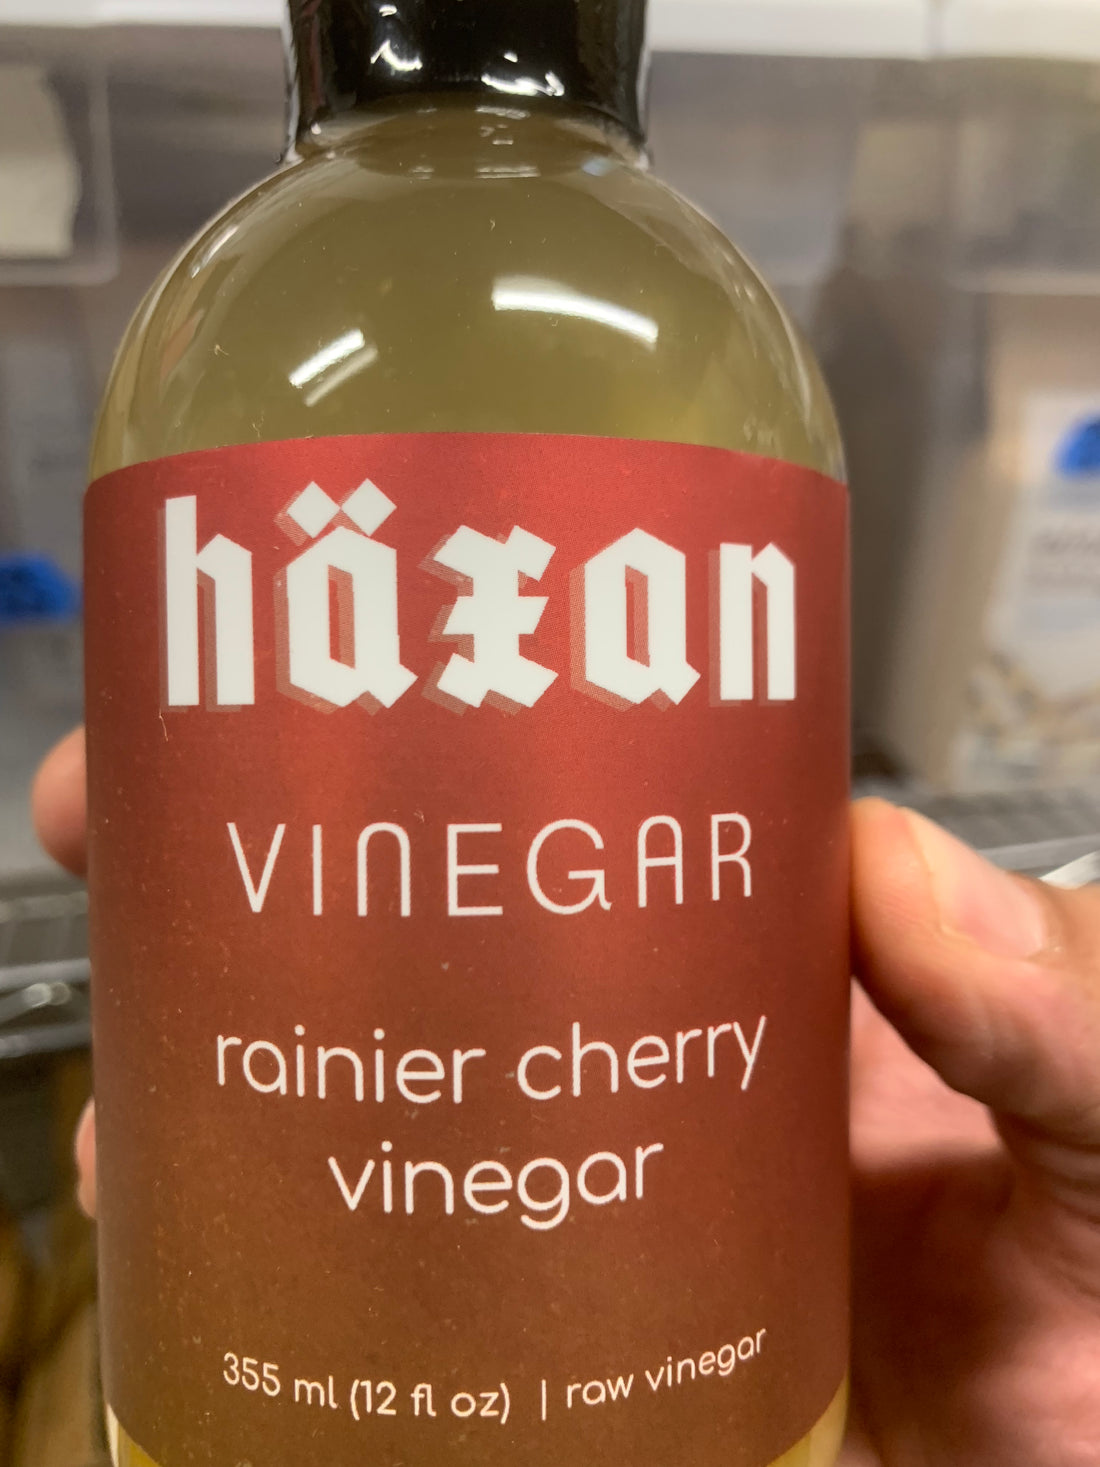 Haxan Vinegar